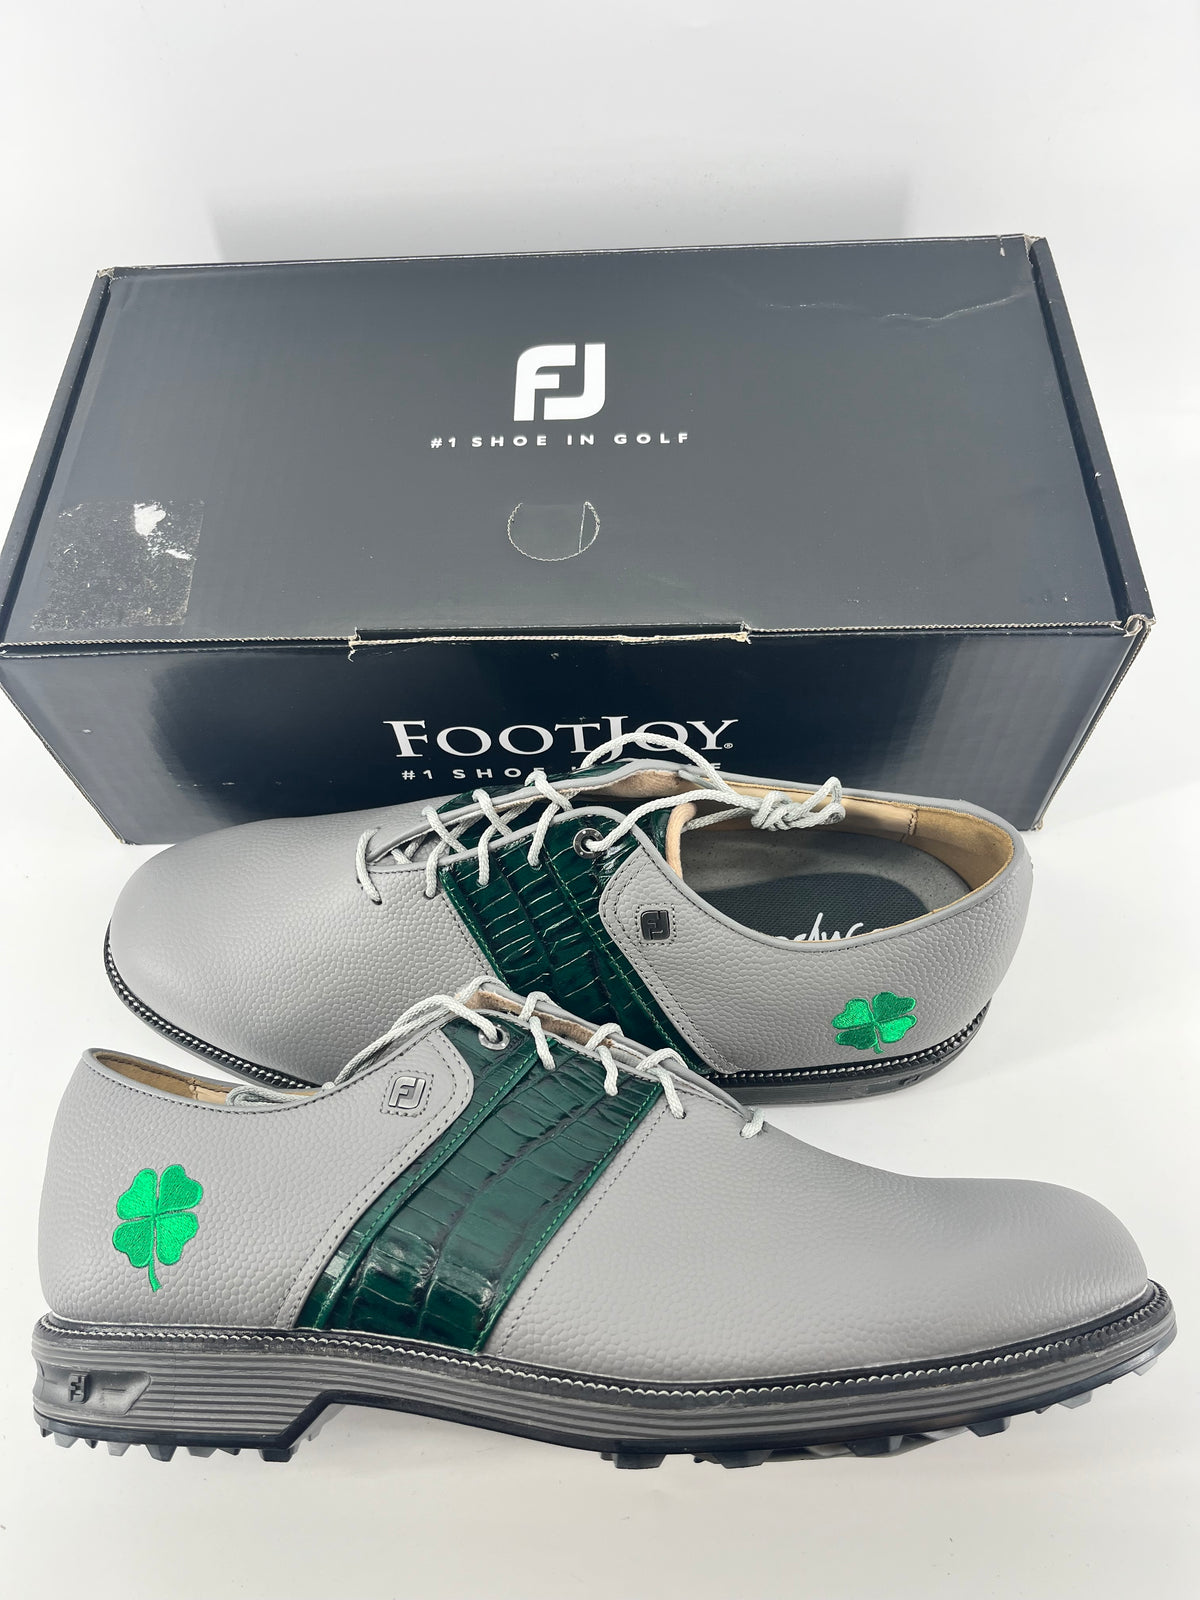 Footjoy Myjoys Premiere Series Packard Spikeless Golf Shoes Shamrock 12.5 M